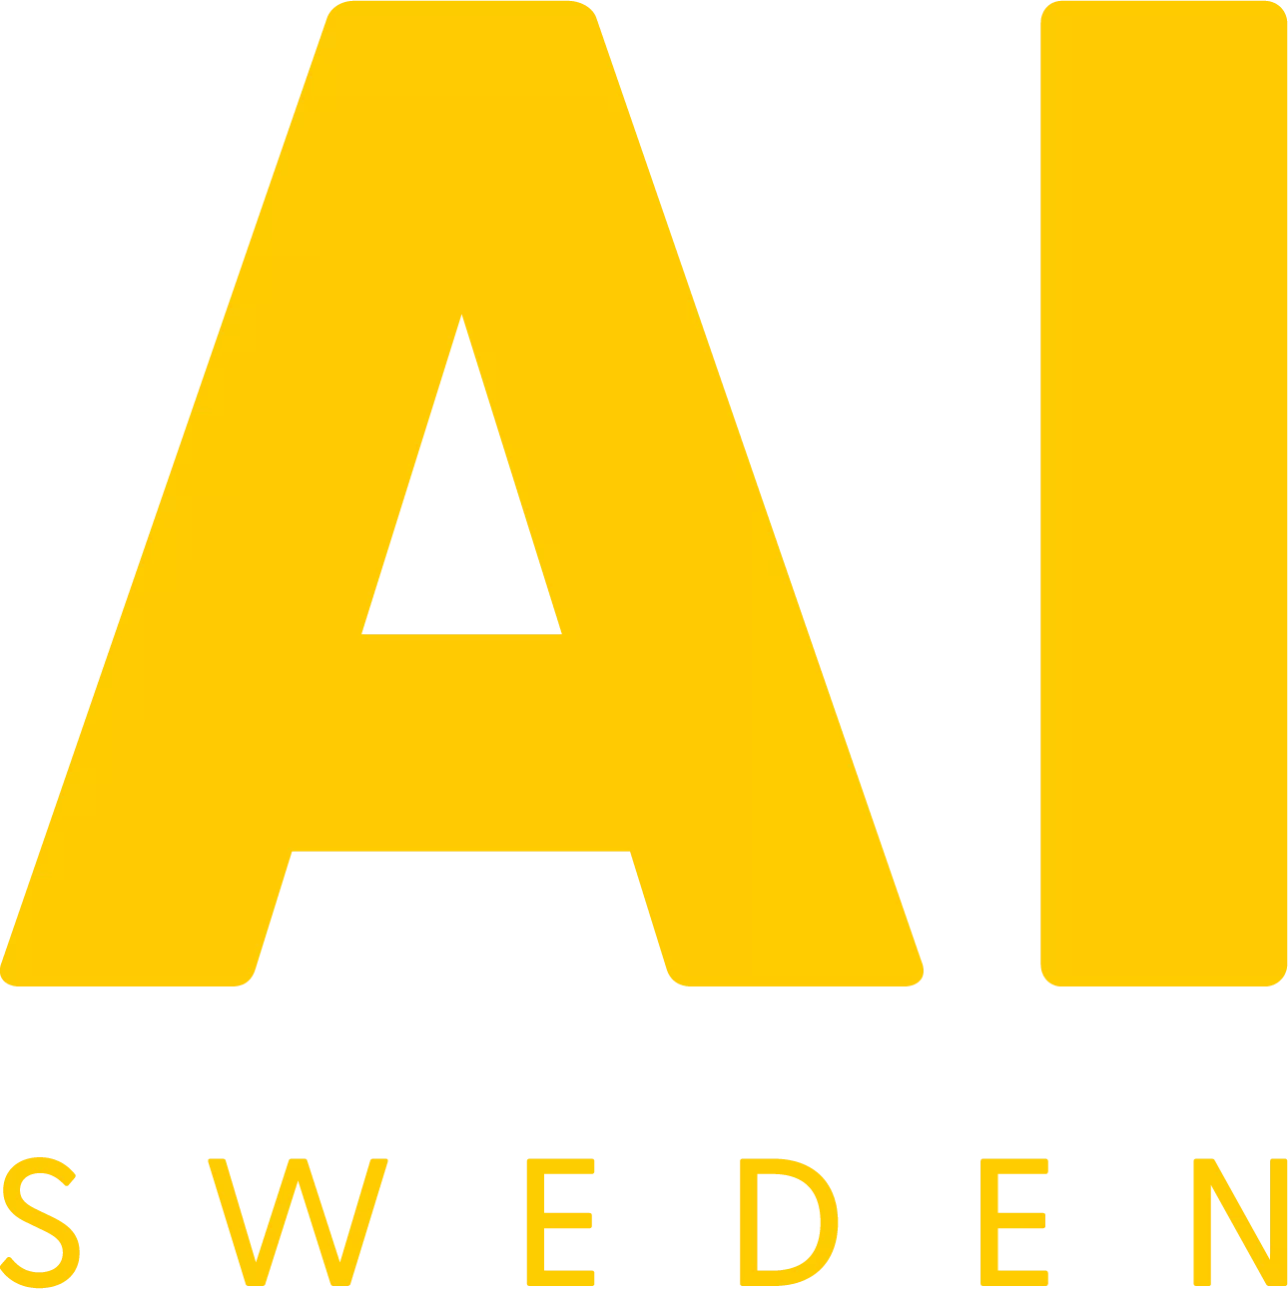 AI Sweden text logo. Illustration. 